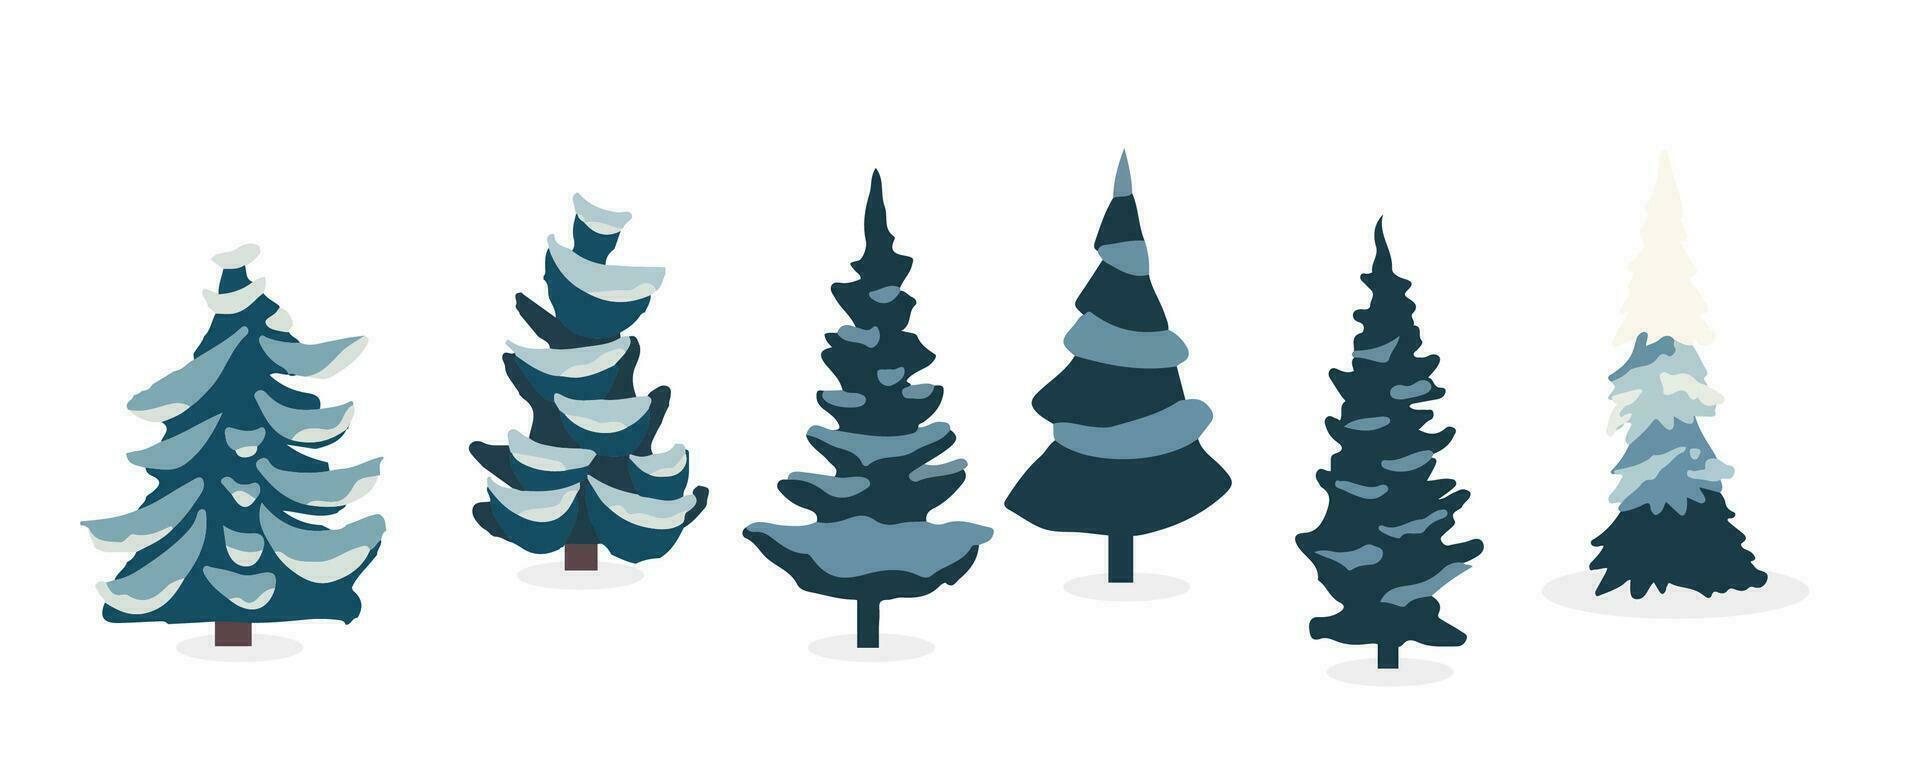 Winter Baum Objekt set.editable Vektor Illustration zum Postkarte